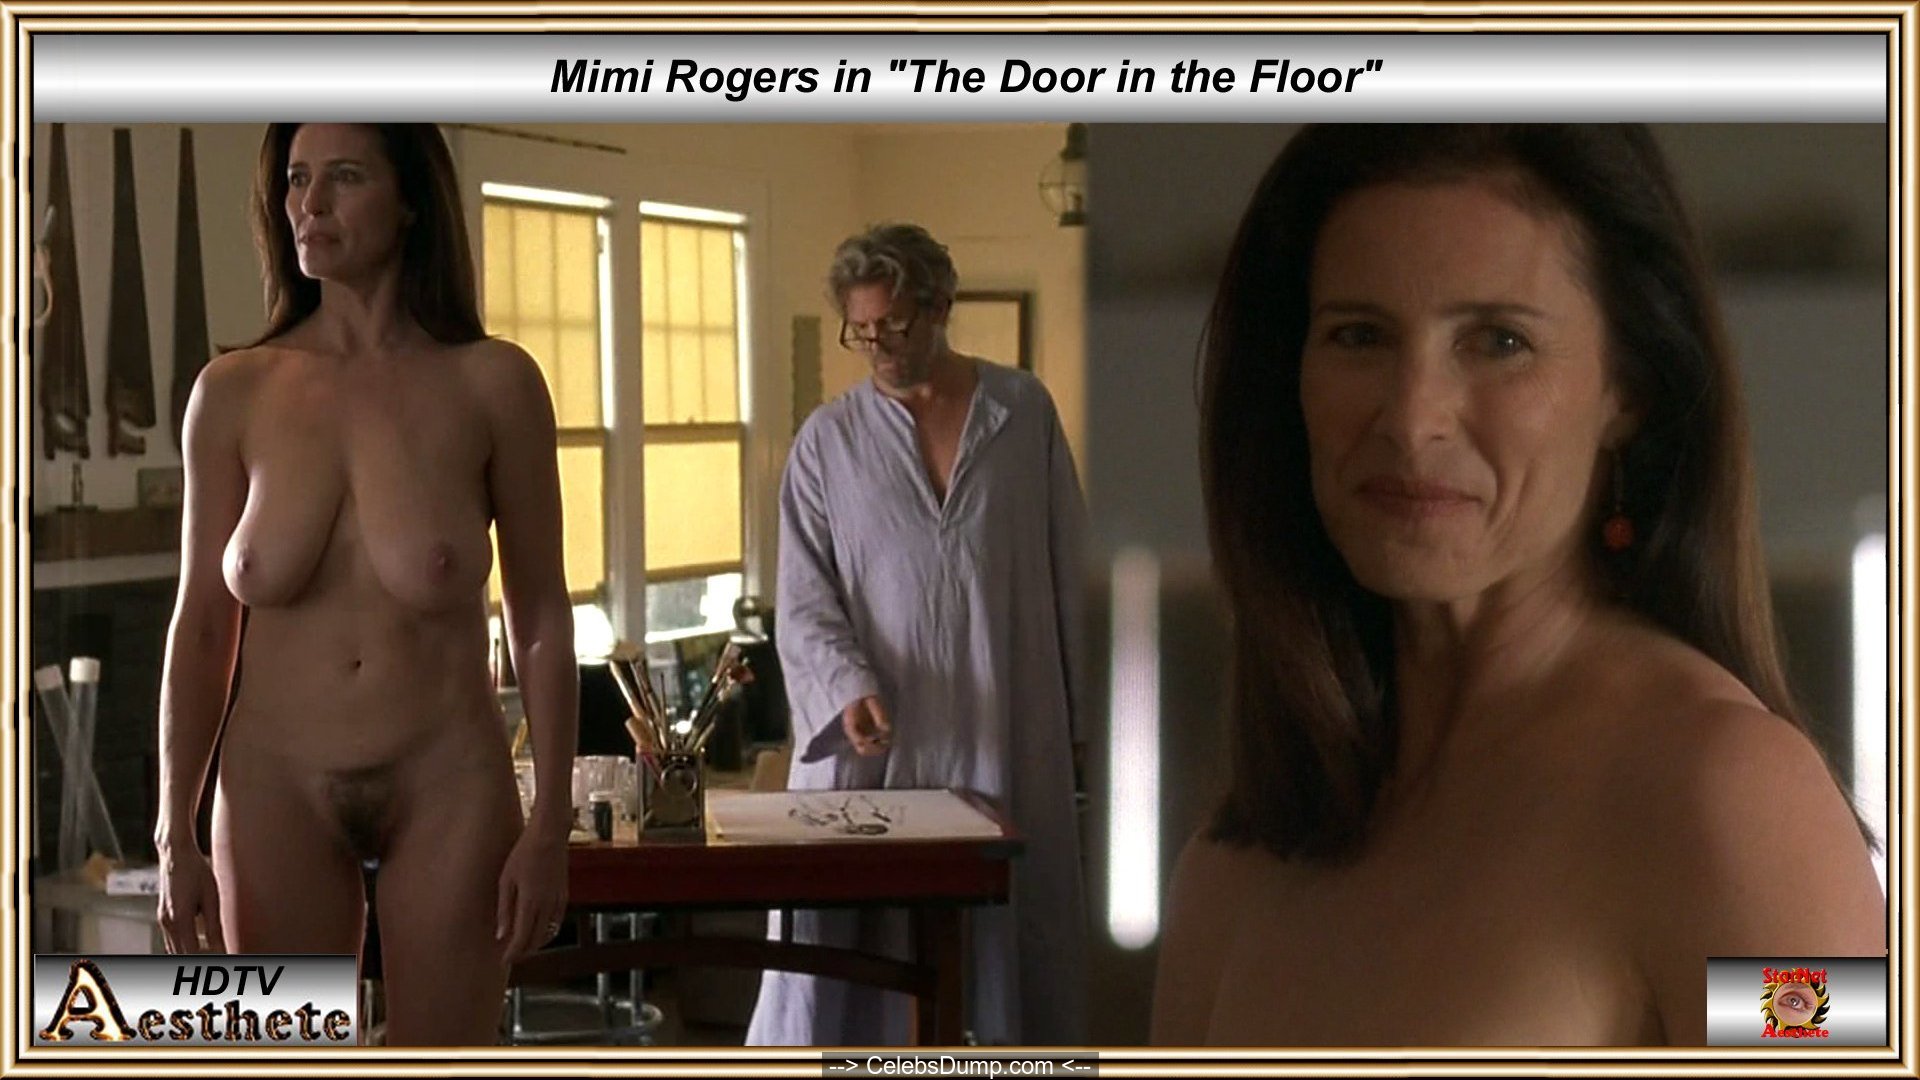 Nude mimi rogers 💖 Mimi rodgers nude pics 👉 👌 Mimi Rogers Nu